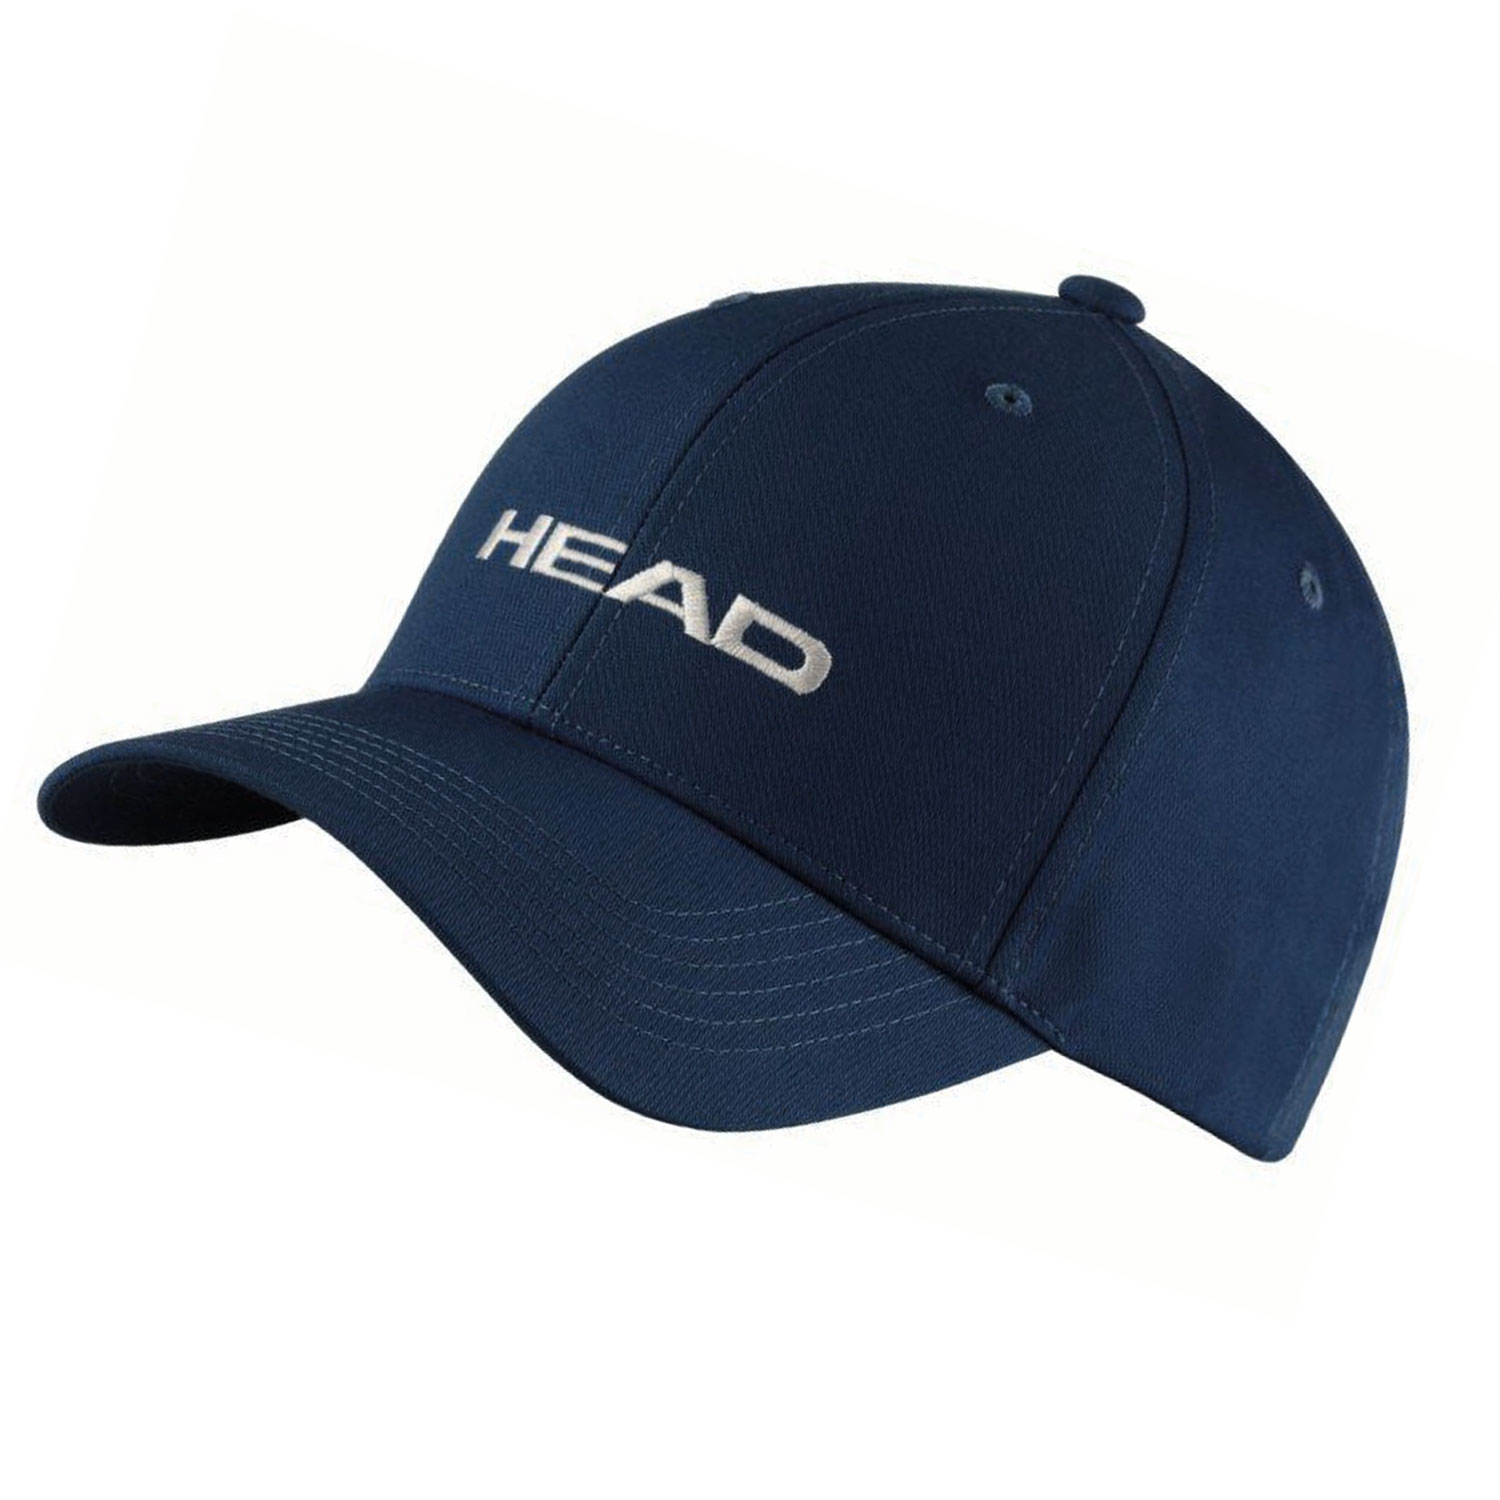 Head Promotion Cappello - Navy